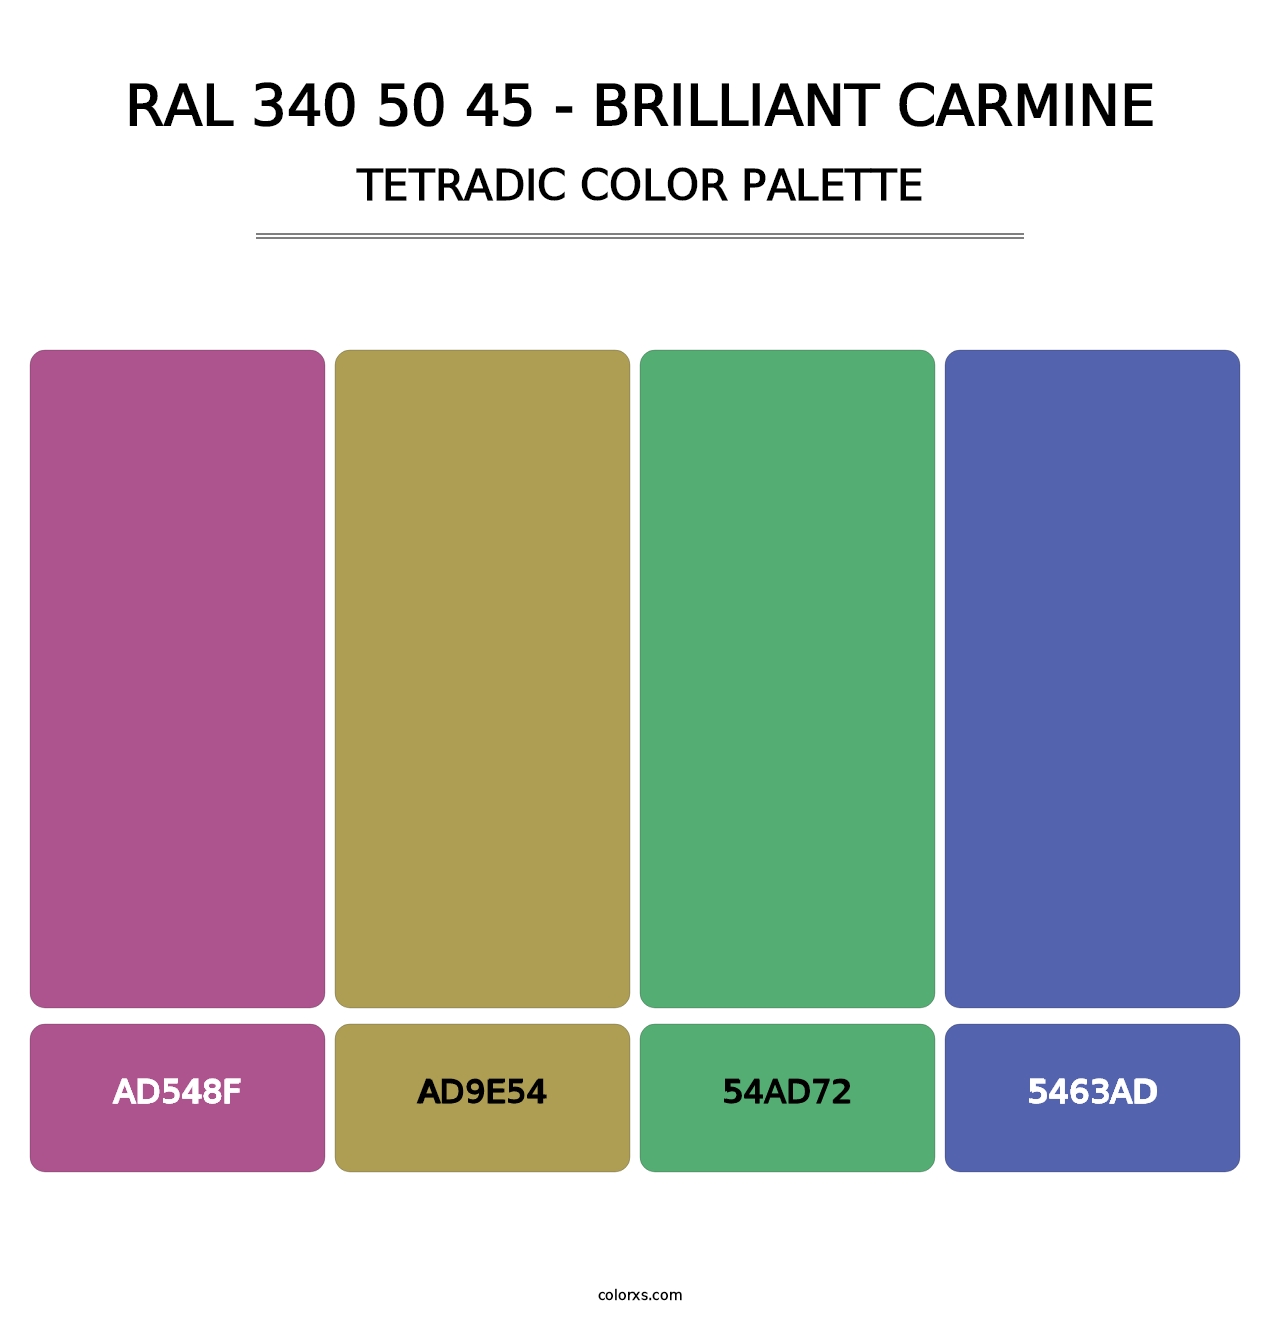 RAL 340 50 45 - Brilliant Carmine - Tetradic Color Palette